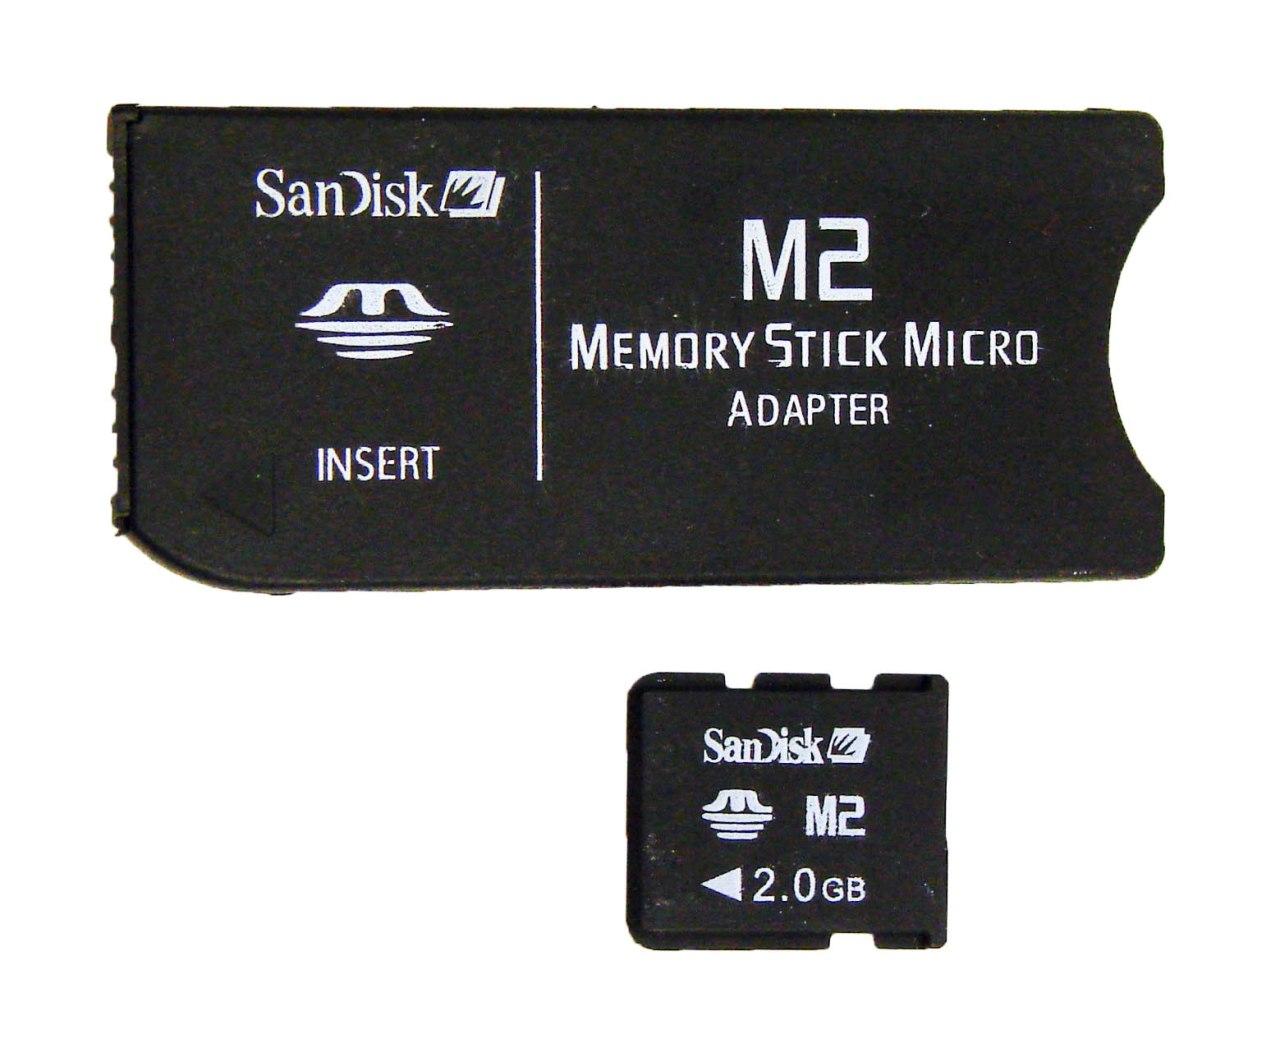   __2Gb MS-M2 Sandisk